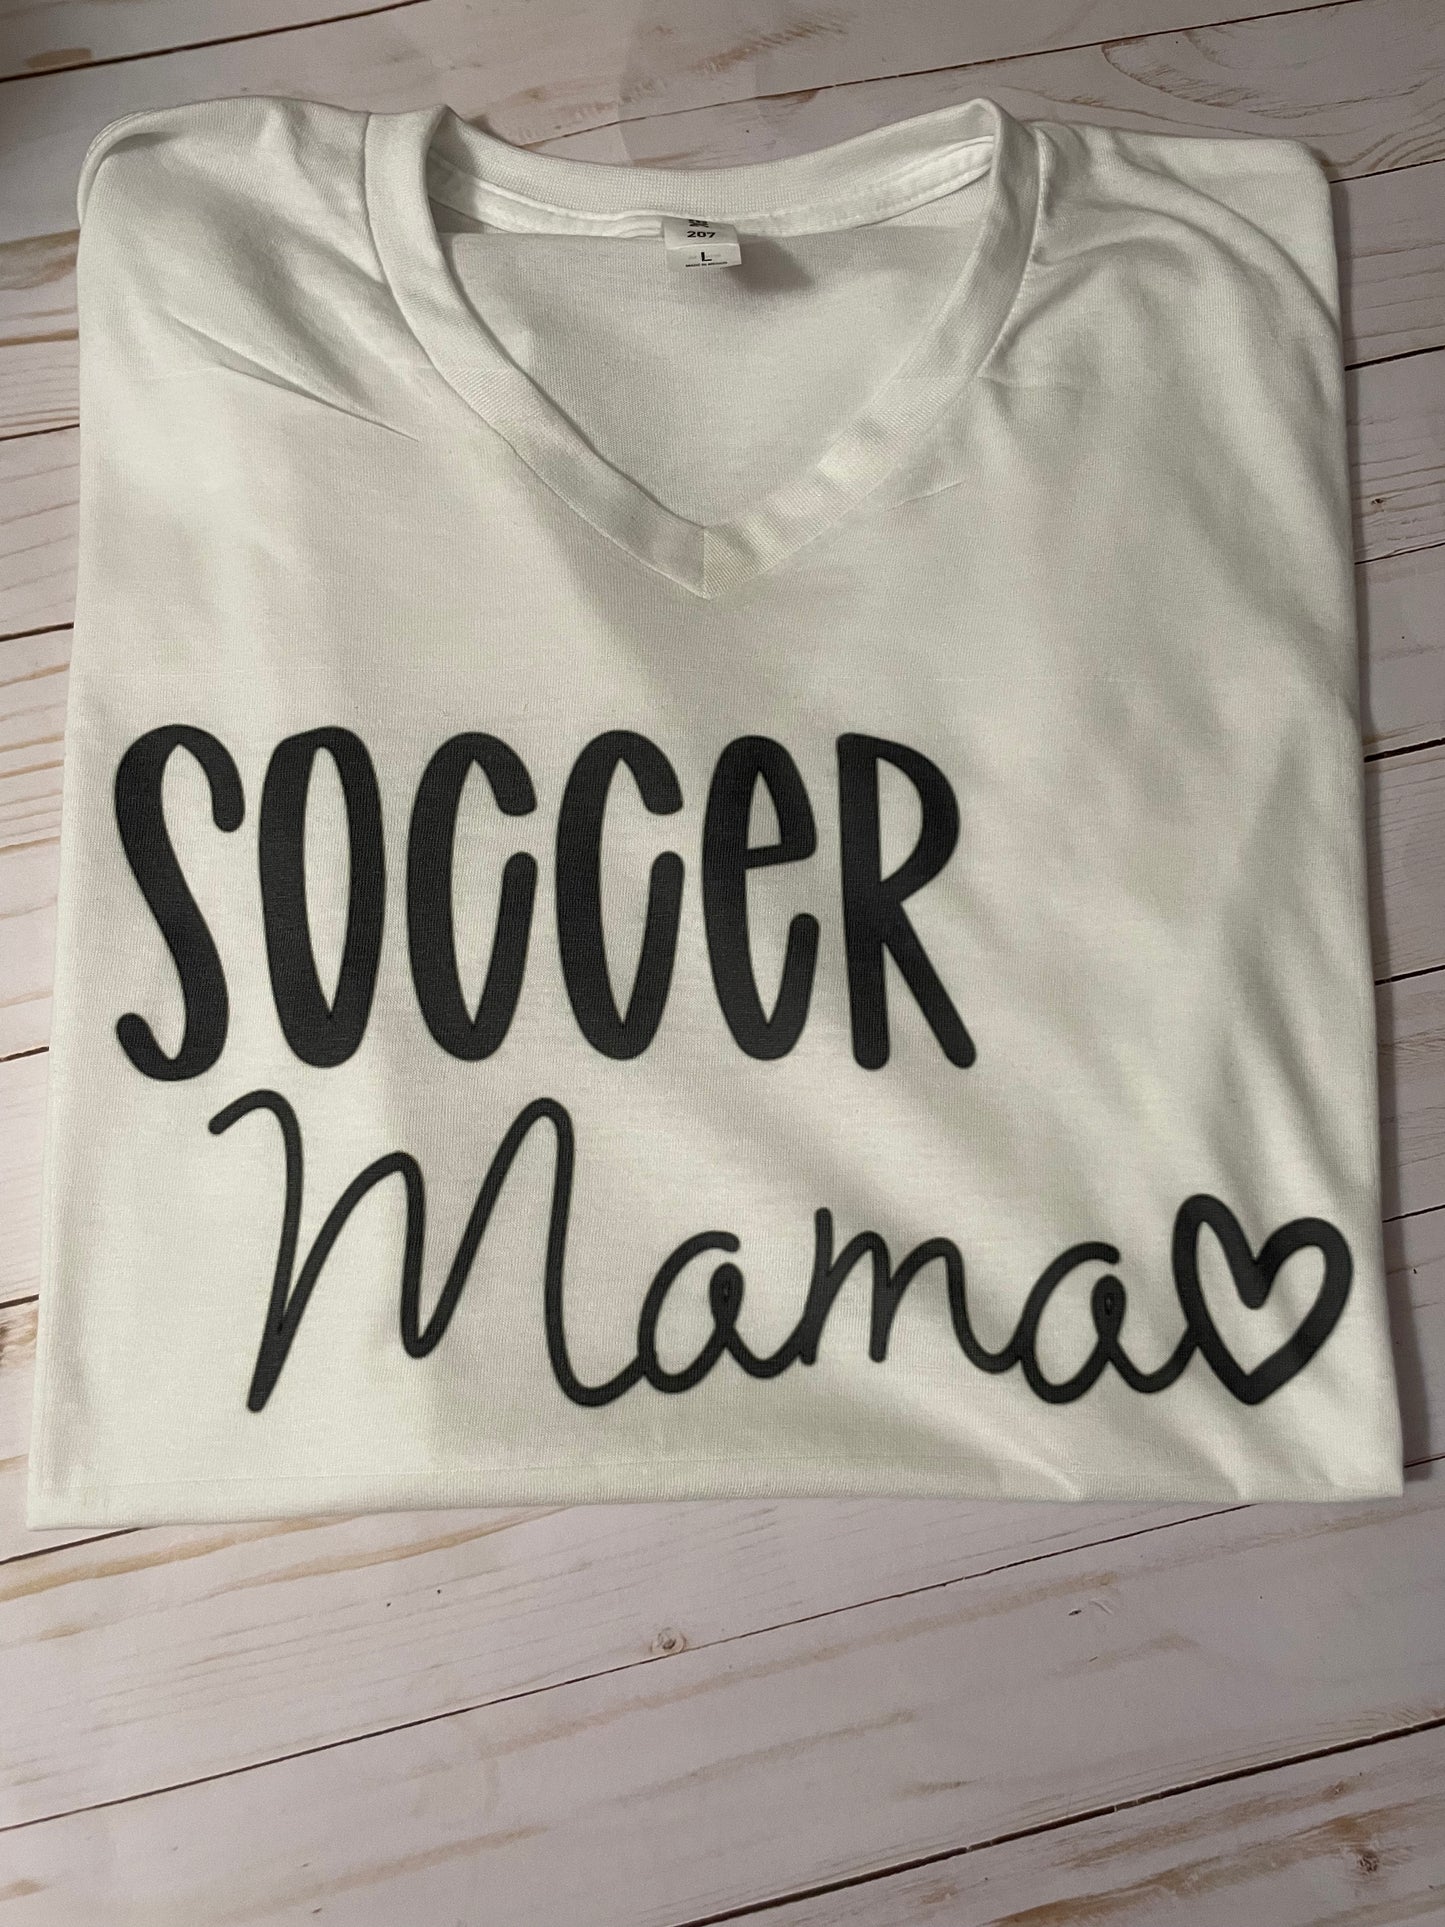 Soccer Mama T-Shirt